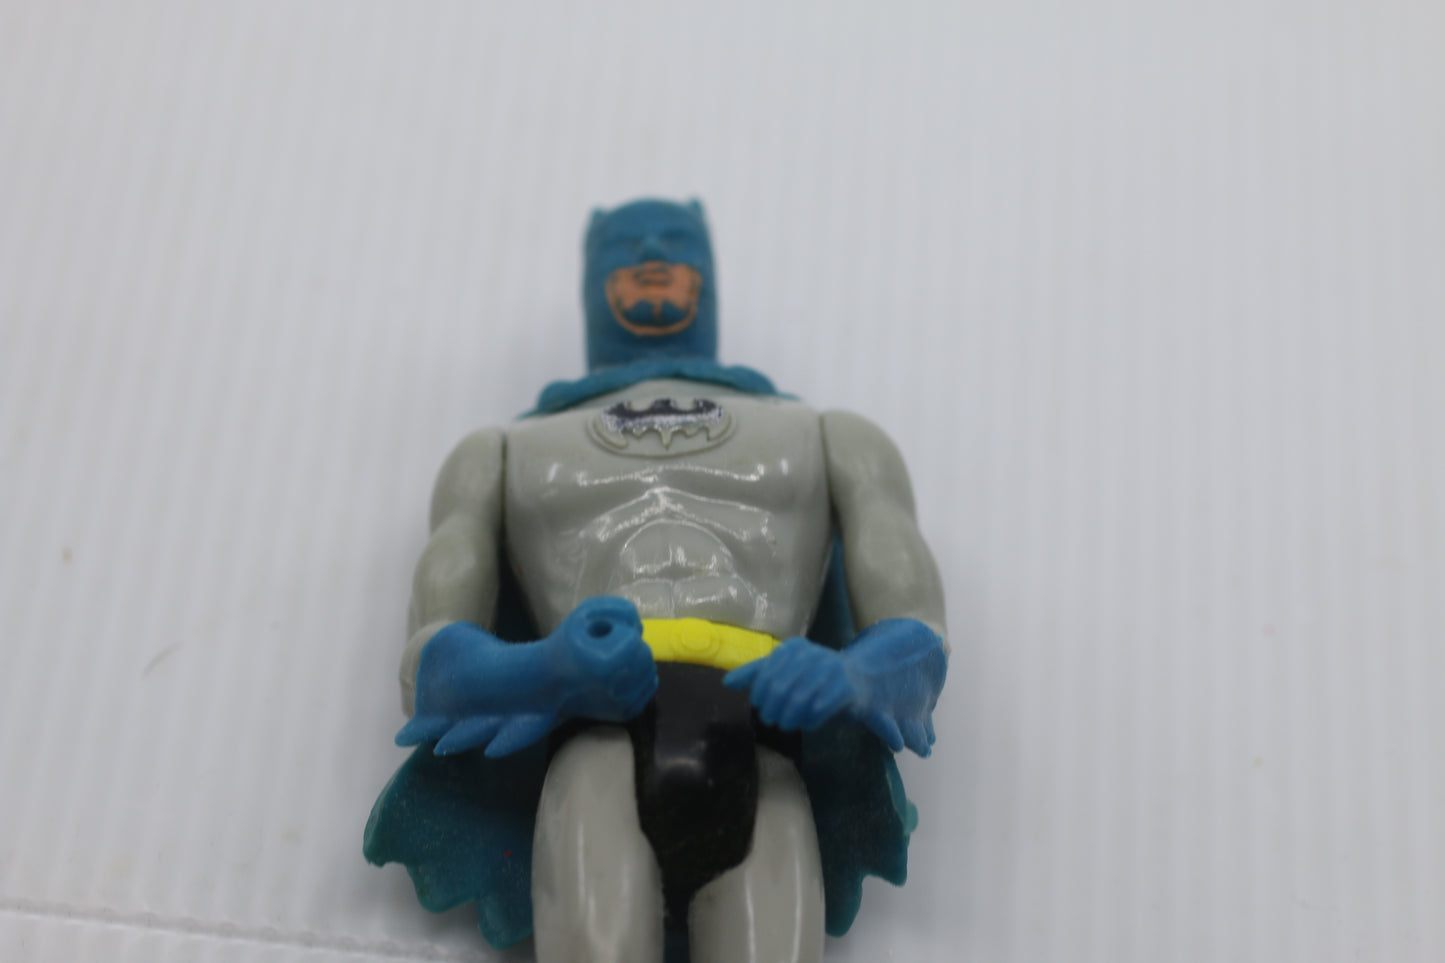 Vintage DC Comics Batman action Figure Mego 1979 Pocket Super Heroes toy